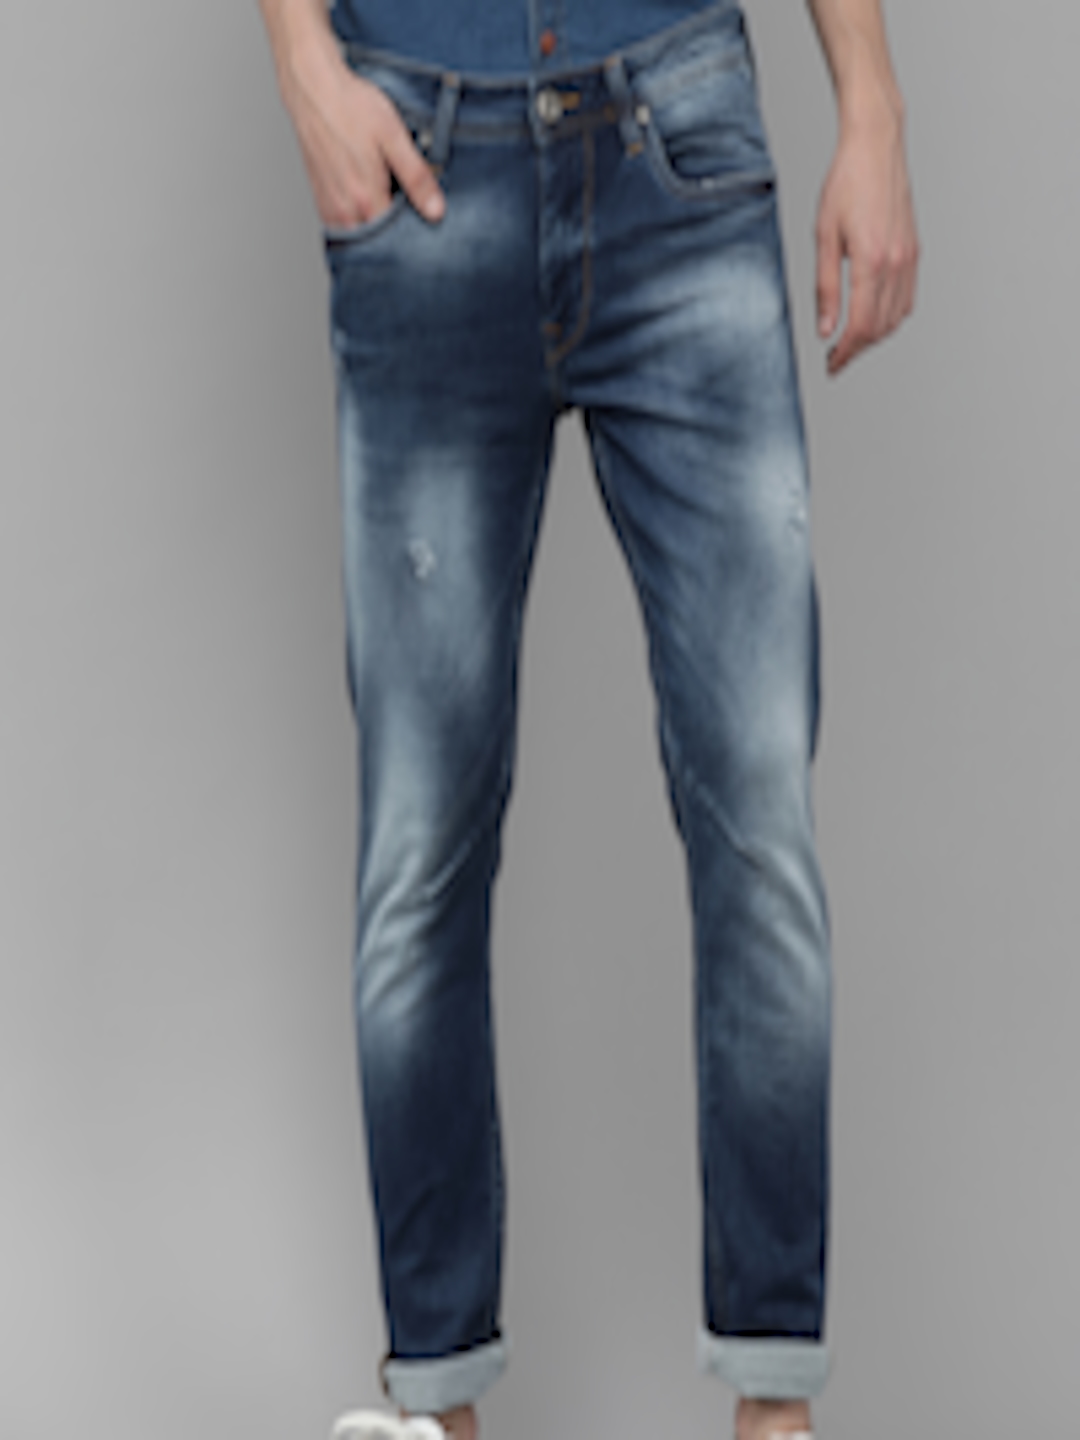 Buy Voi Jeans Men Navy Blue Solid Mildly Distressed Heavy Fade Skinny ...